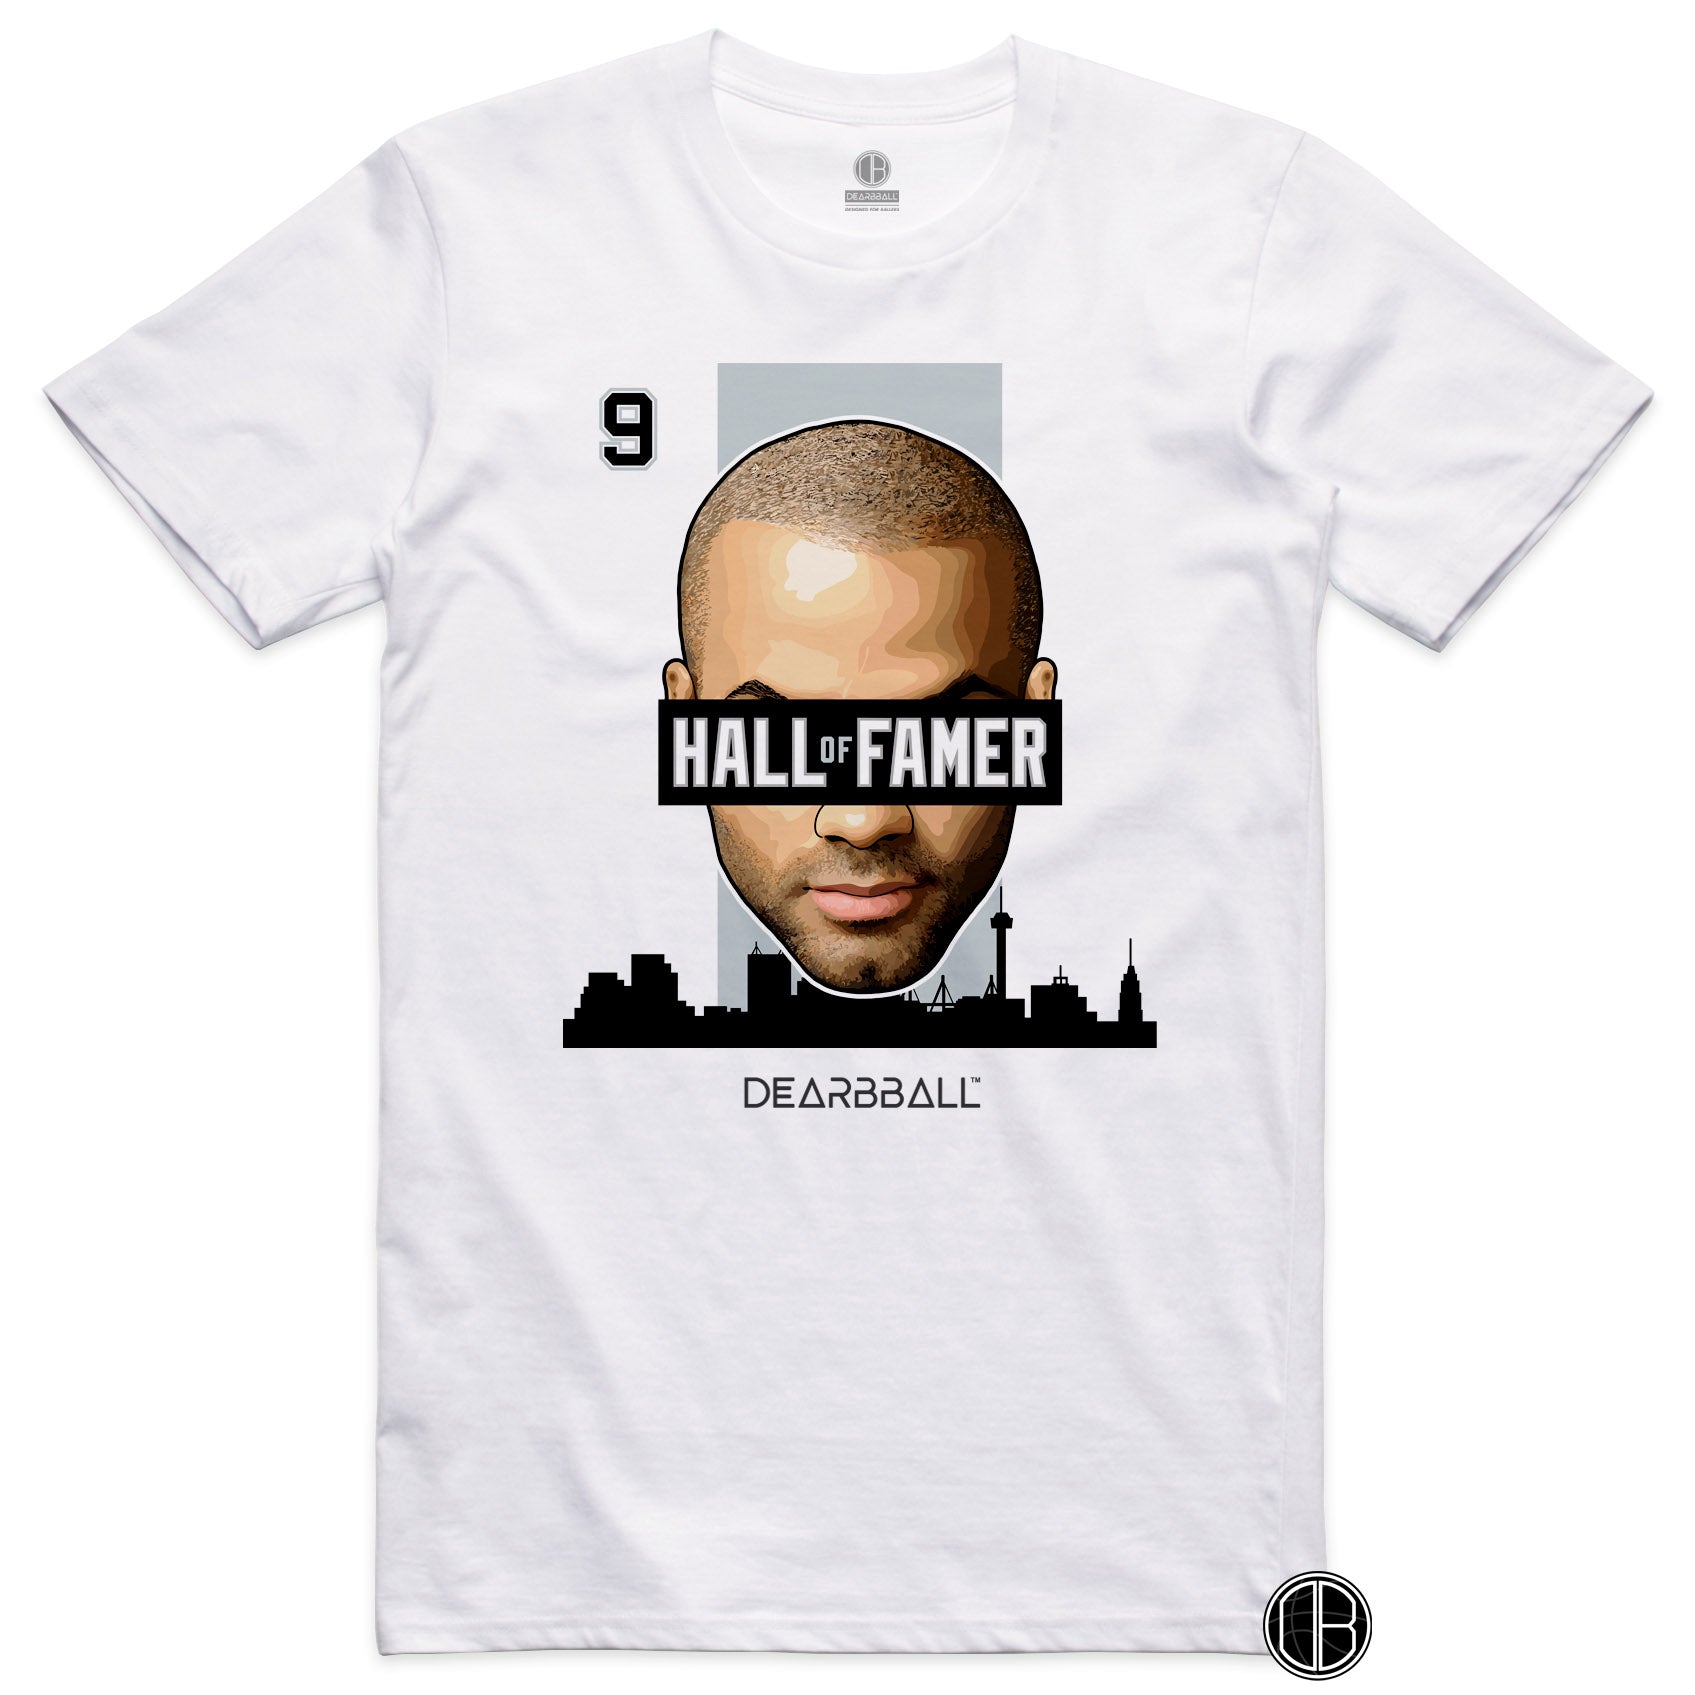 T-shirt DearBBall Pack 3 - Hall of Famer 9 San Antonio